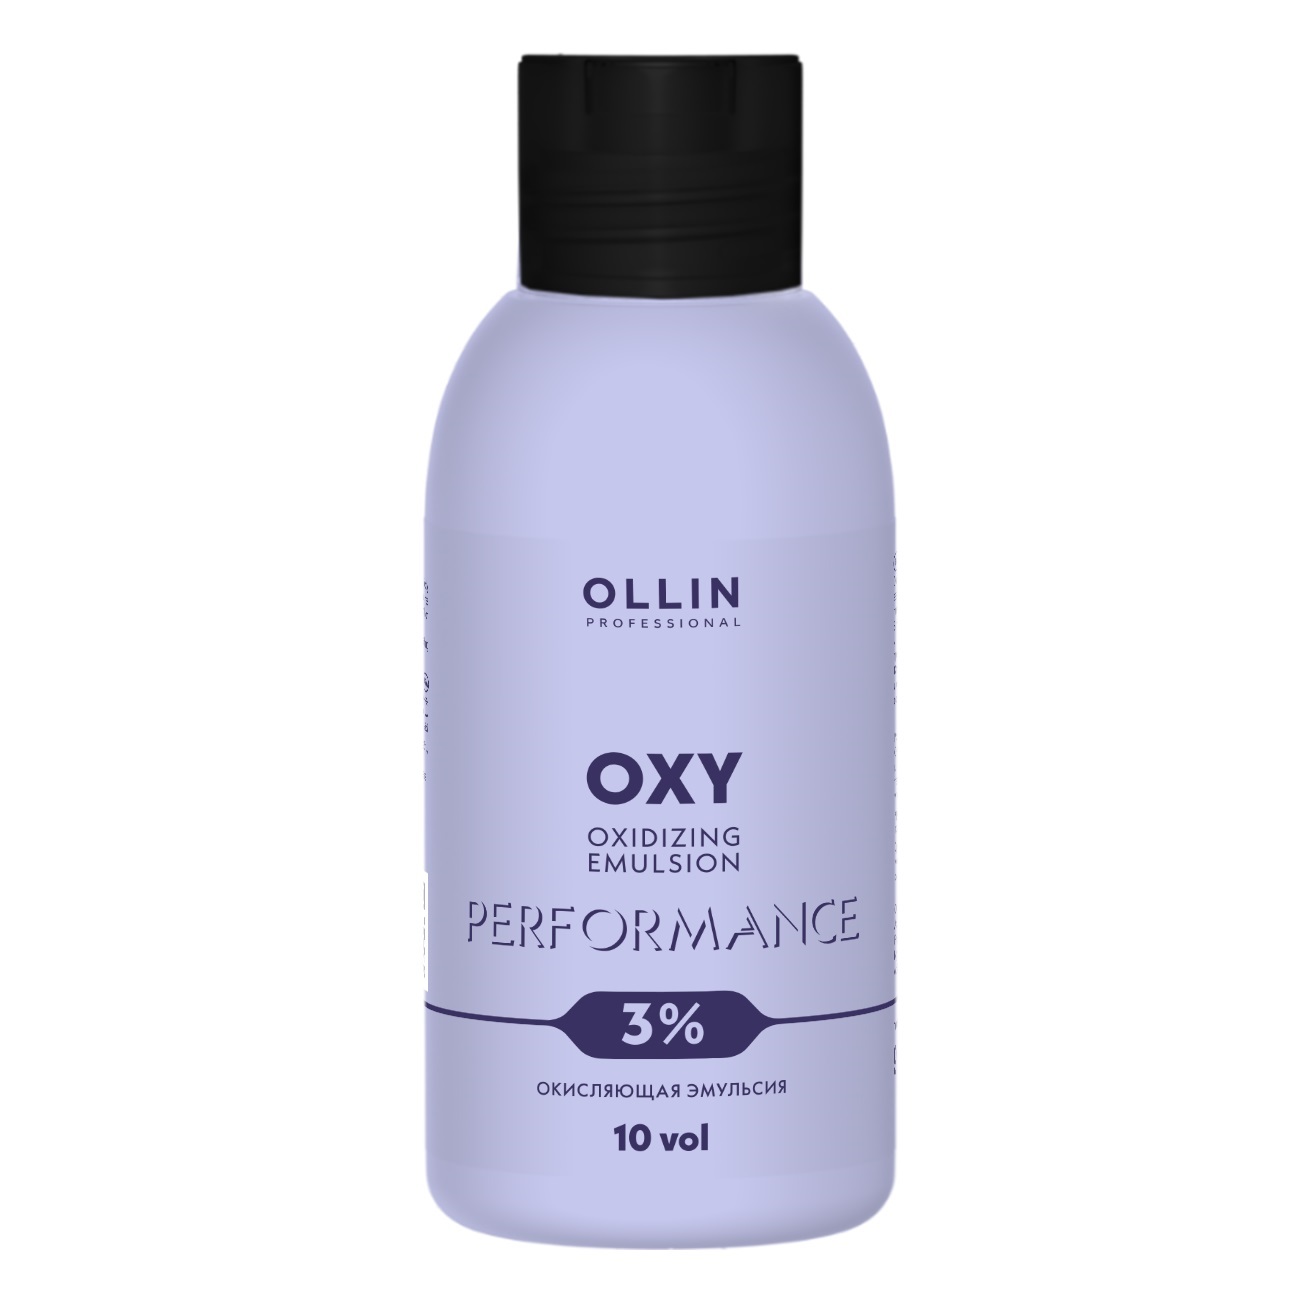 Ollin Professional Окисляющая эмульсия 3% 10 vol, 90 мл (Ollin Professional, Performance) enercos peroxide developer coloray 20 vol 6% 100 ml